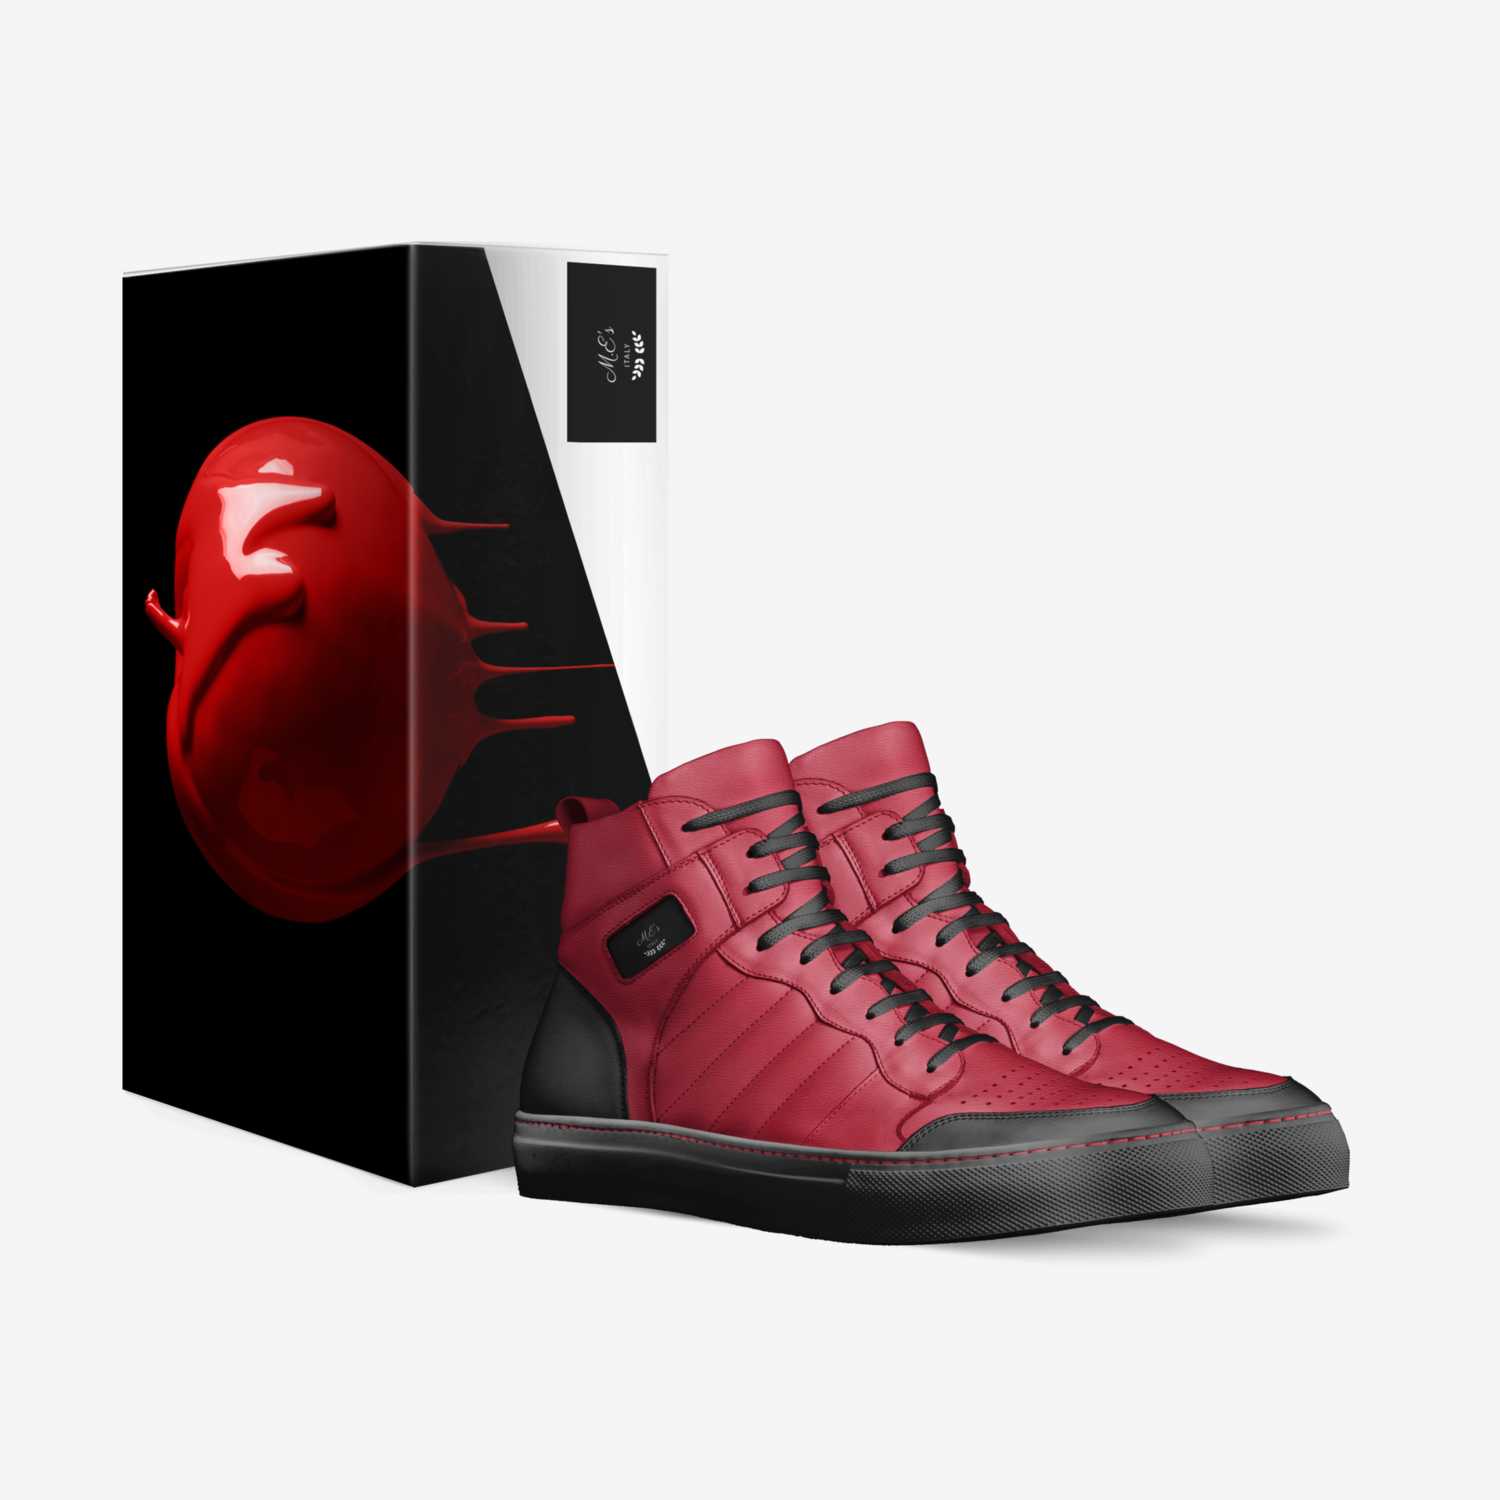 M.E's custom made in Italy shoes by Mario Estrada | Box view